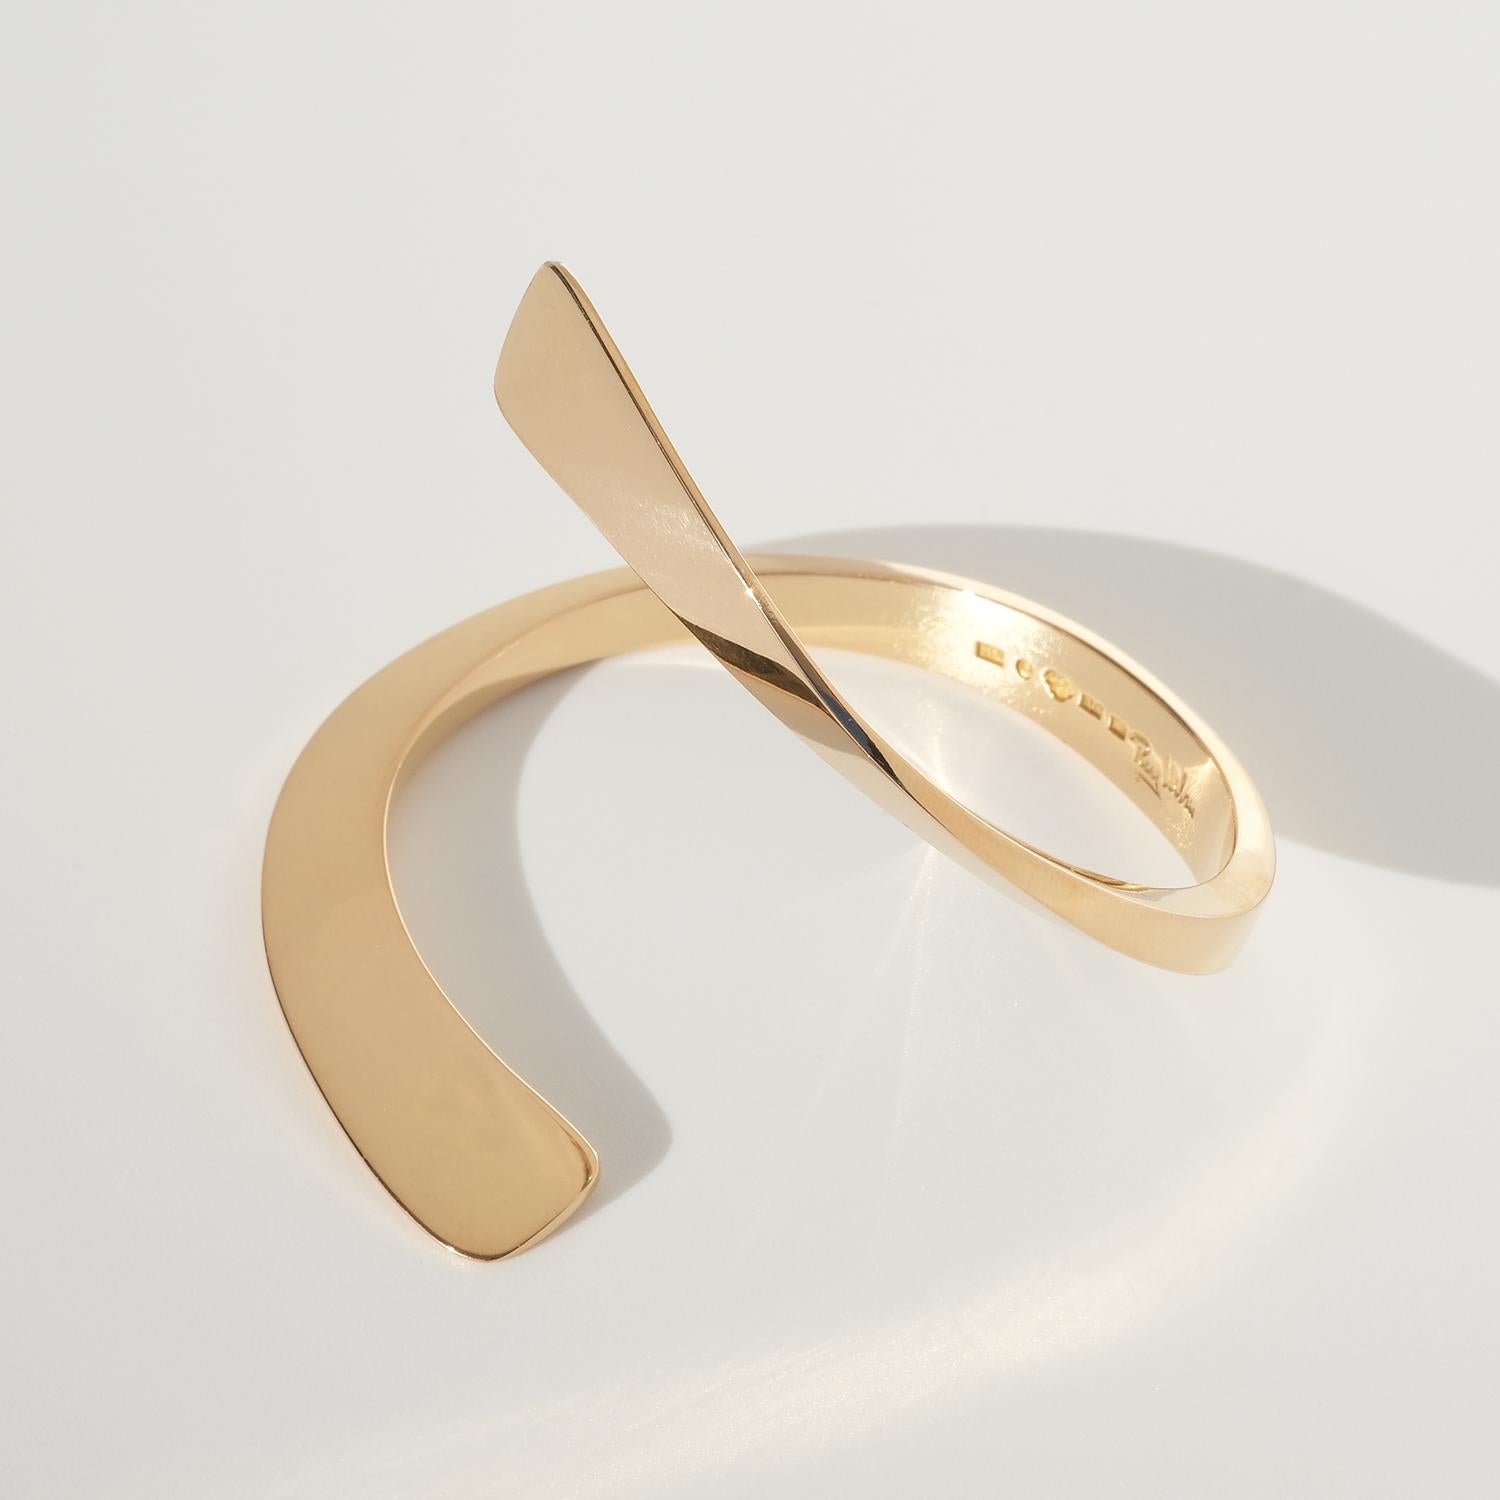 Swedish gold bracelet by Rey Urban made 1965. 10